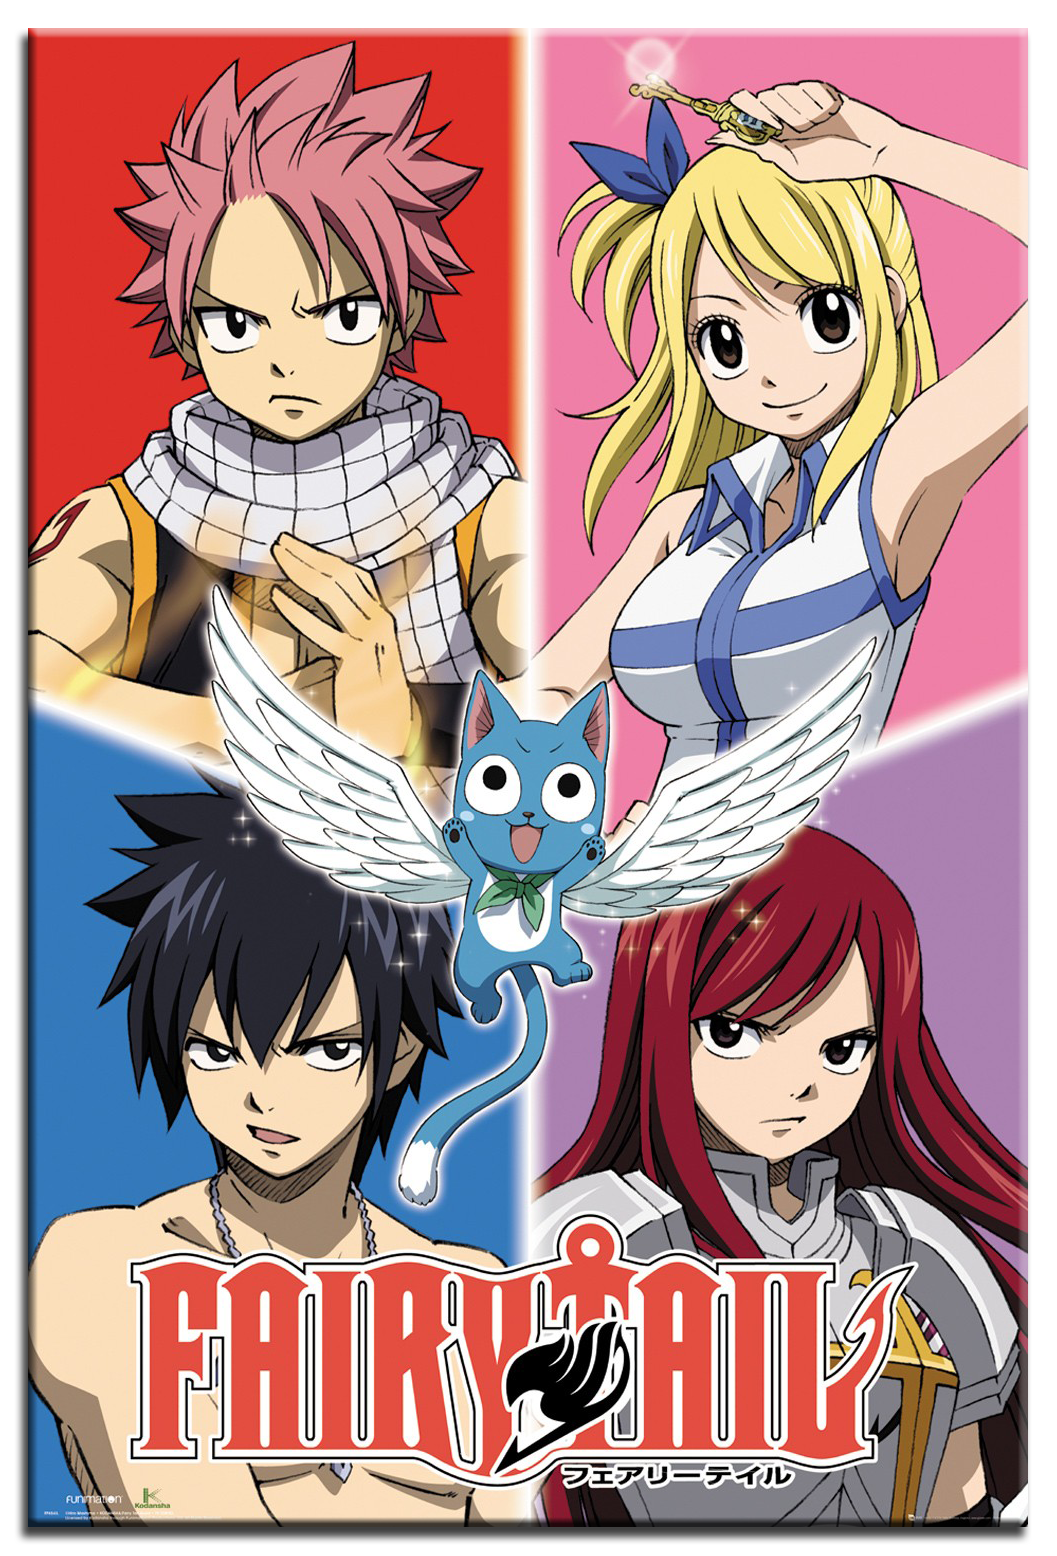 Fairy Tail: Sinopsis, Autor, Manga, Anime, Personajes Y Mucho Más